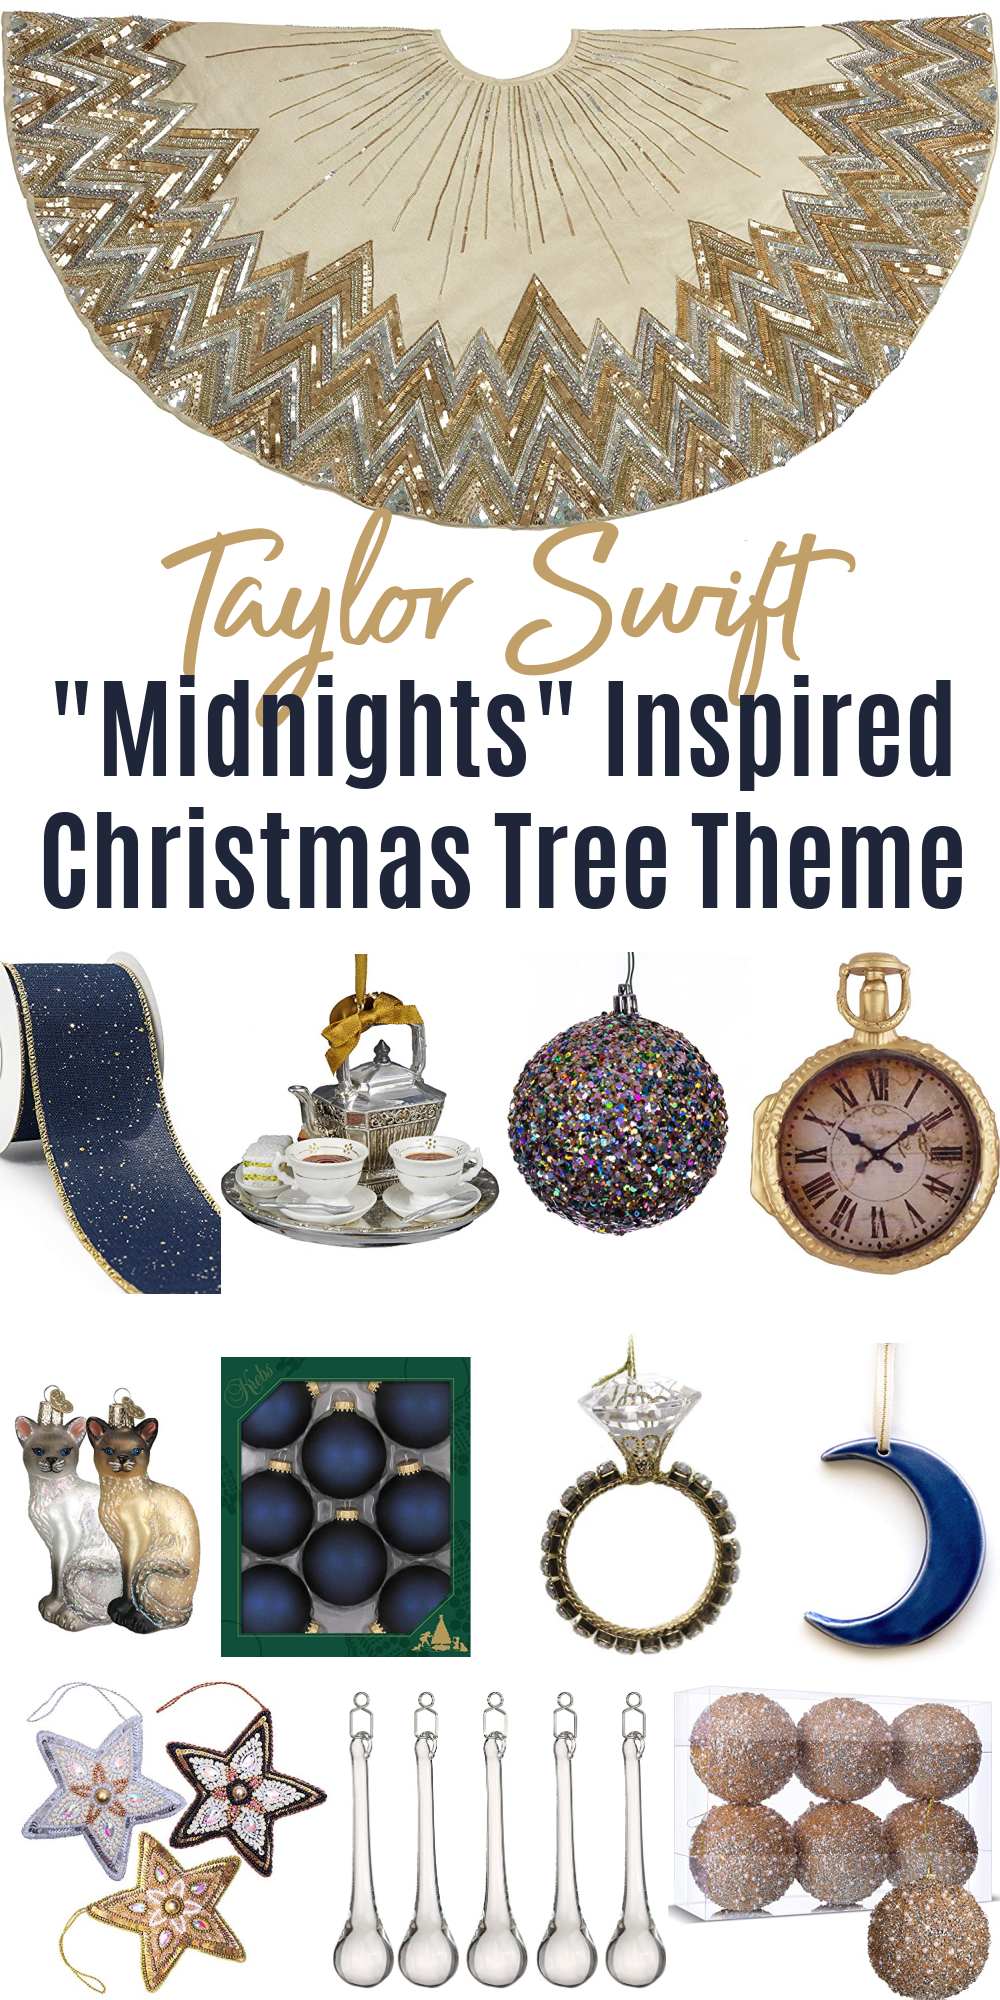 Taylor Swift Midnights Inspired Christmas Tree Theme